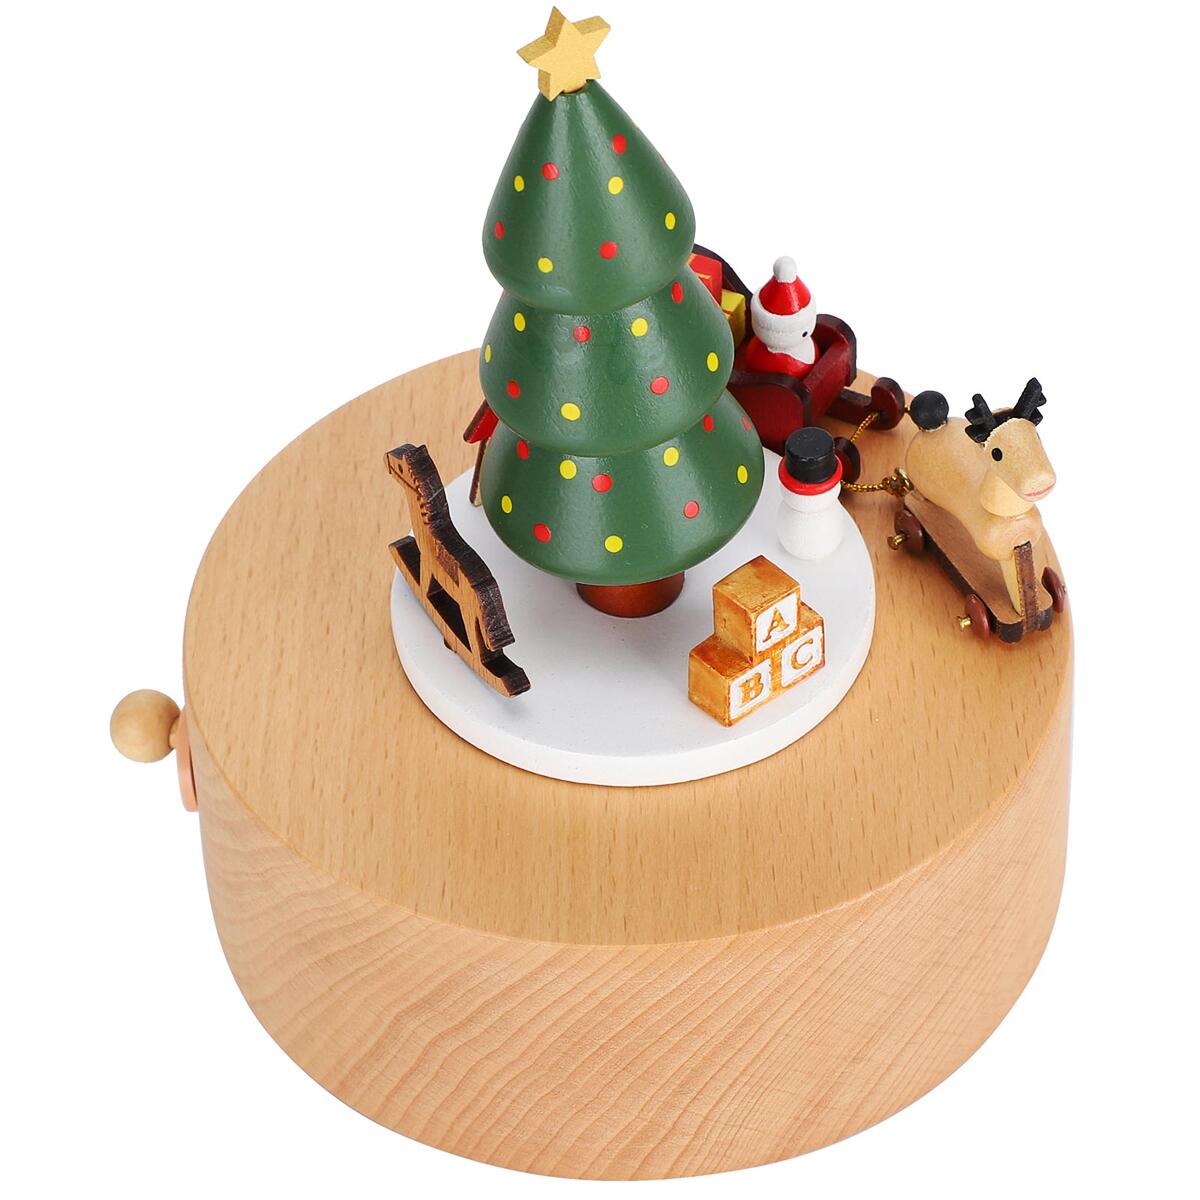 Santa sleigh and Christmas Tree (Melody: We Wish You a Merry Christmas)